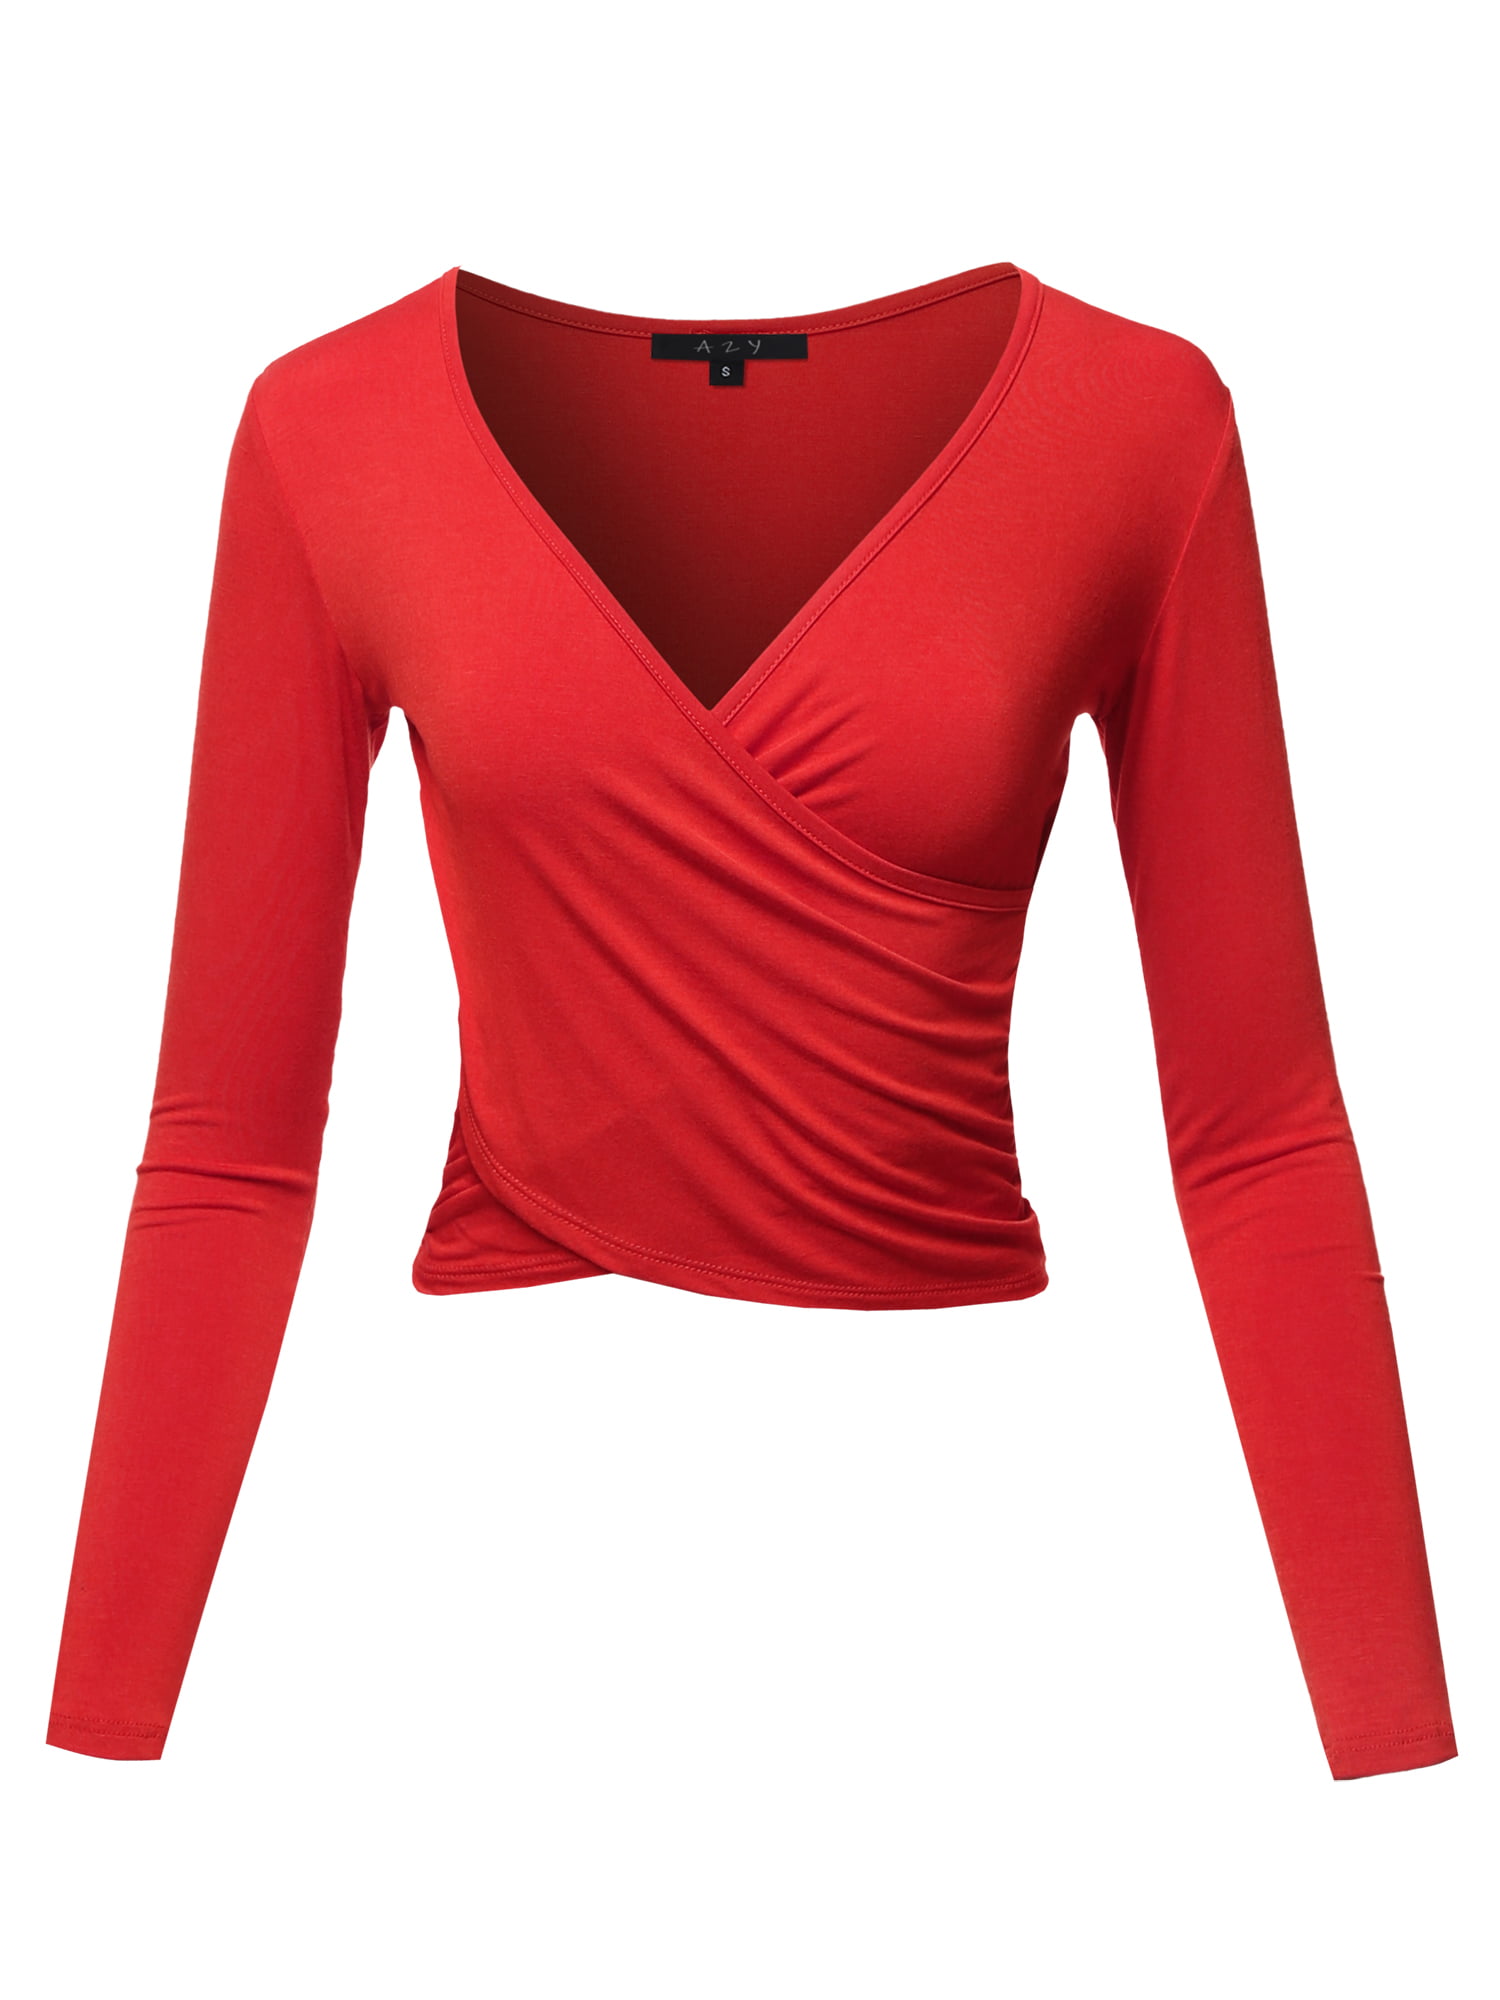 A2Y - A2Y Women's Long Sleeve Deep V Neck Cross Wrap Crop Top T Shirts